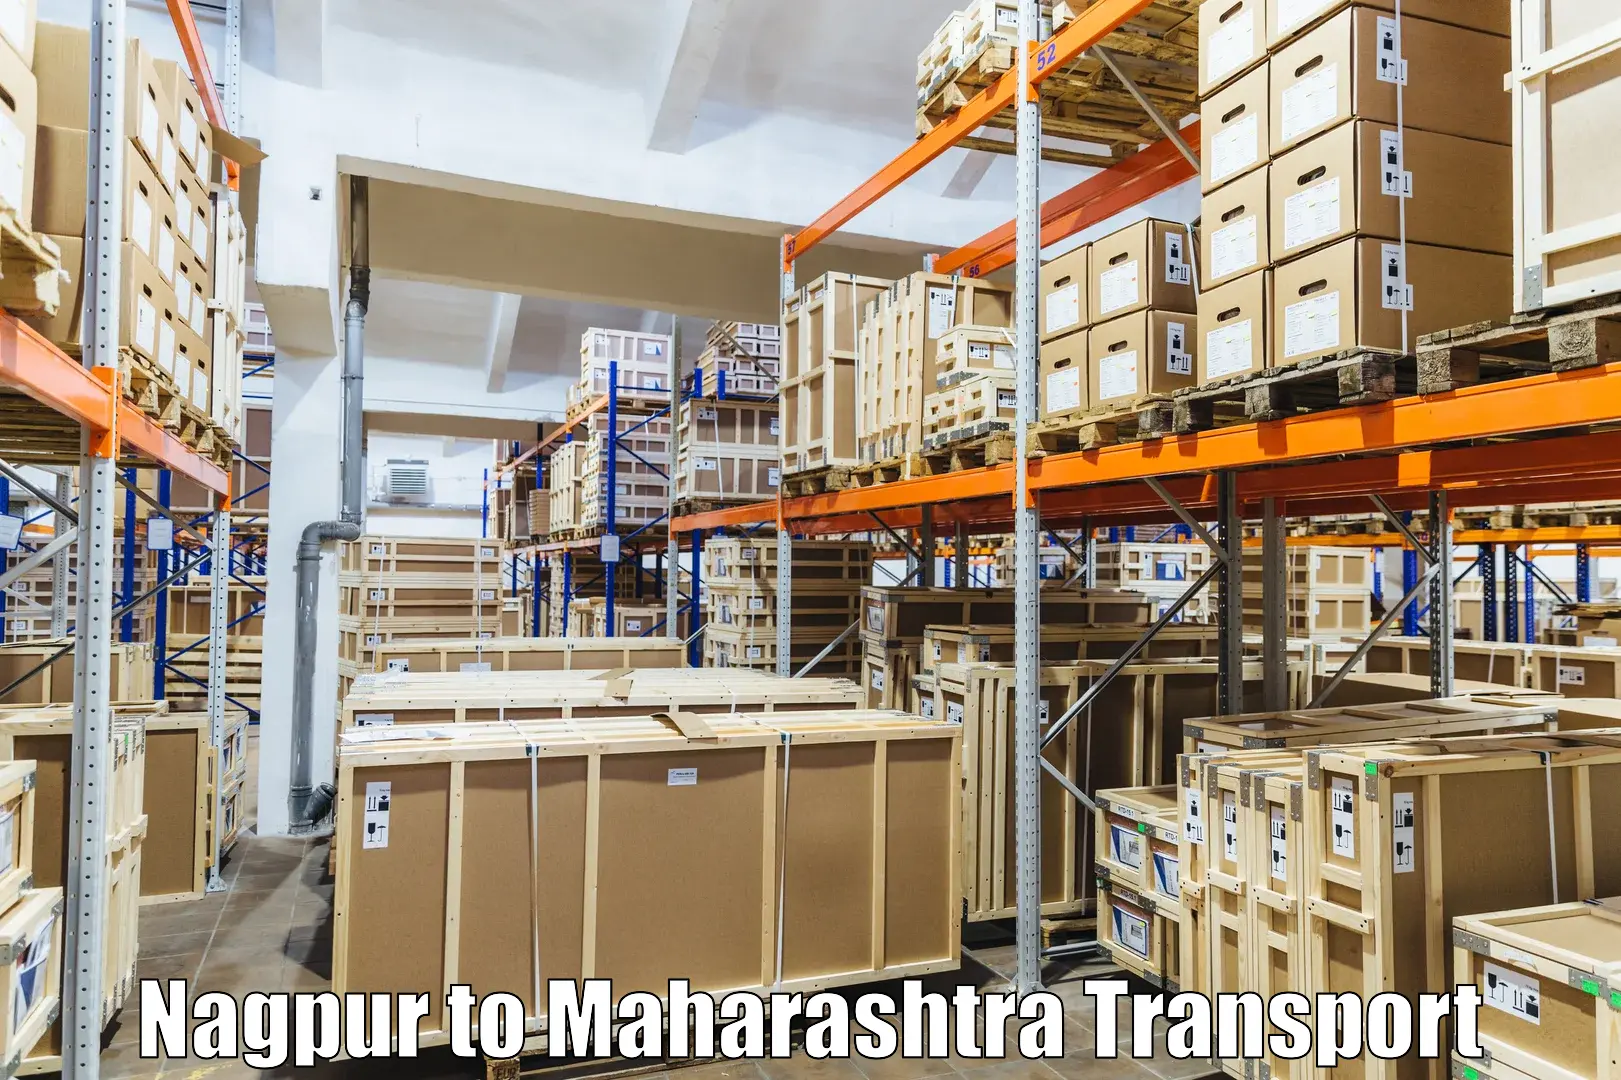 Shipping partner Nagpur to Nashik